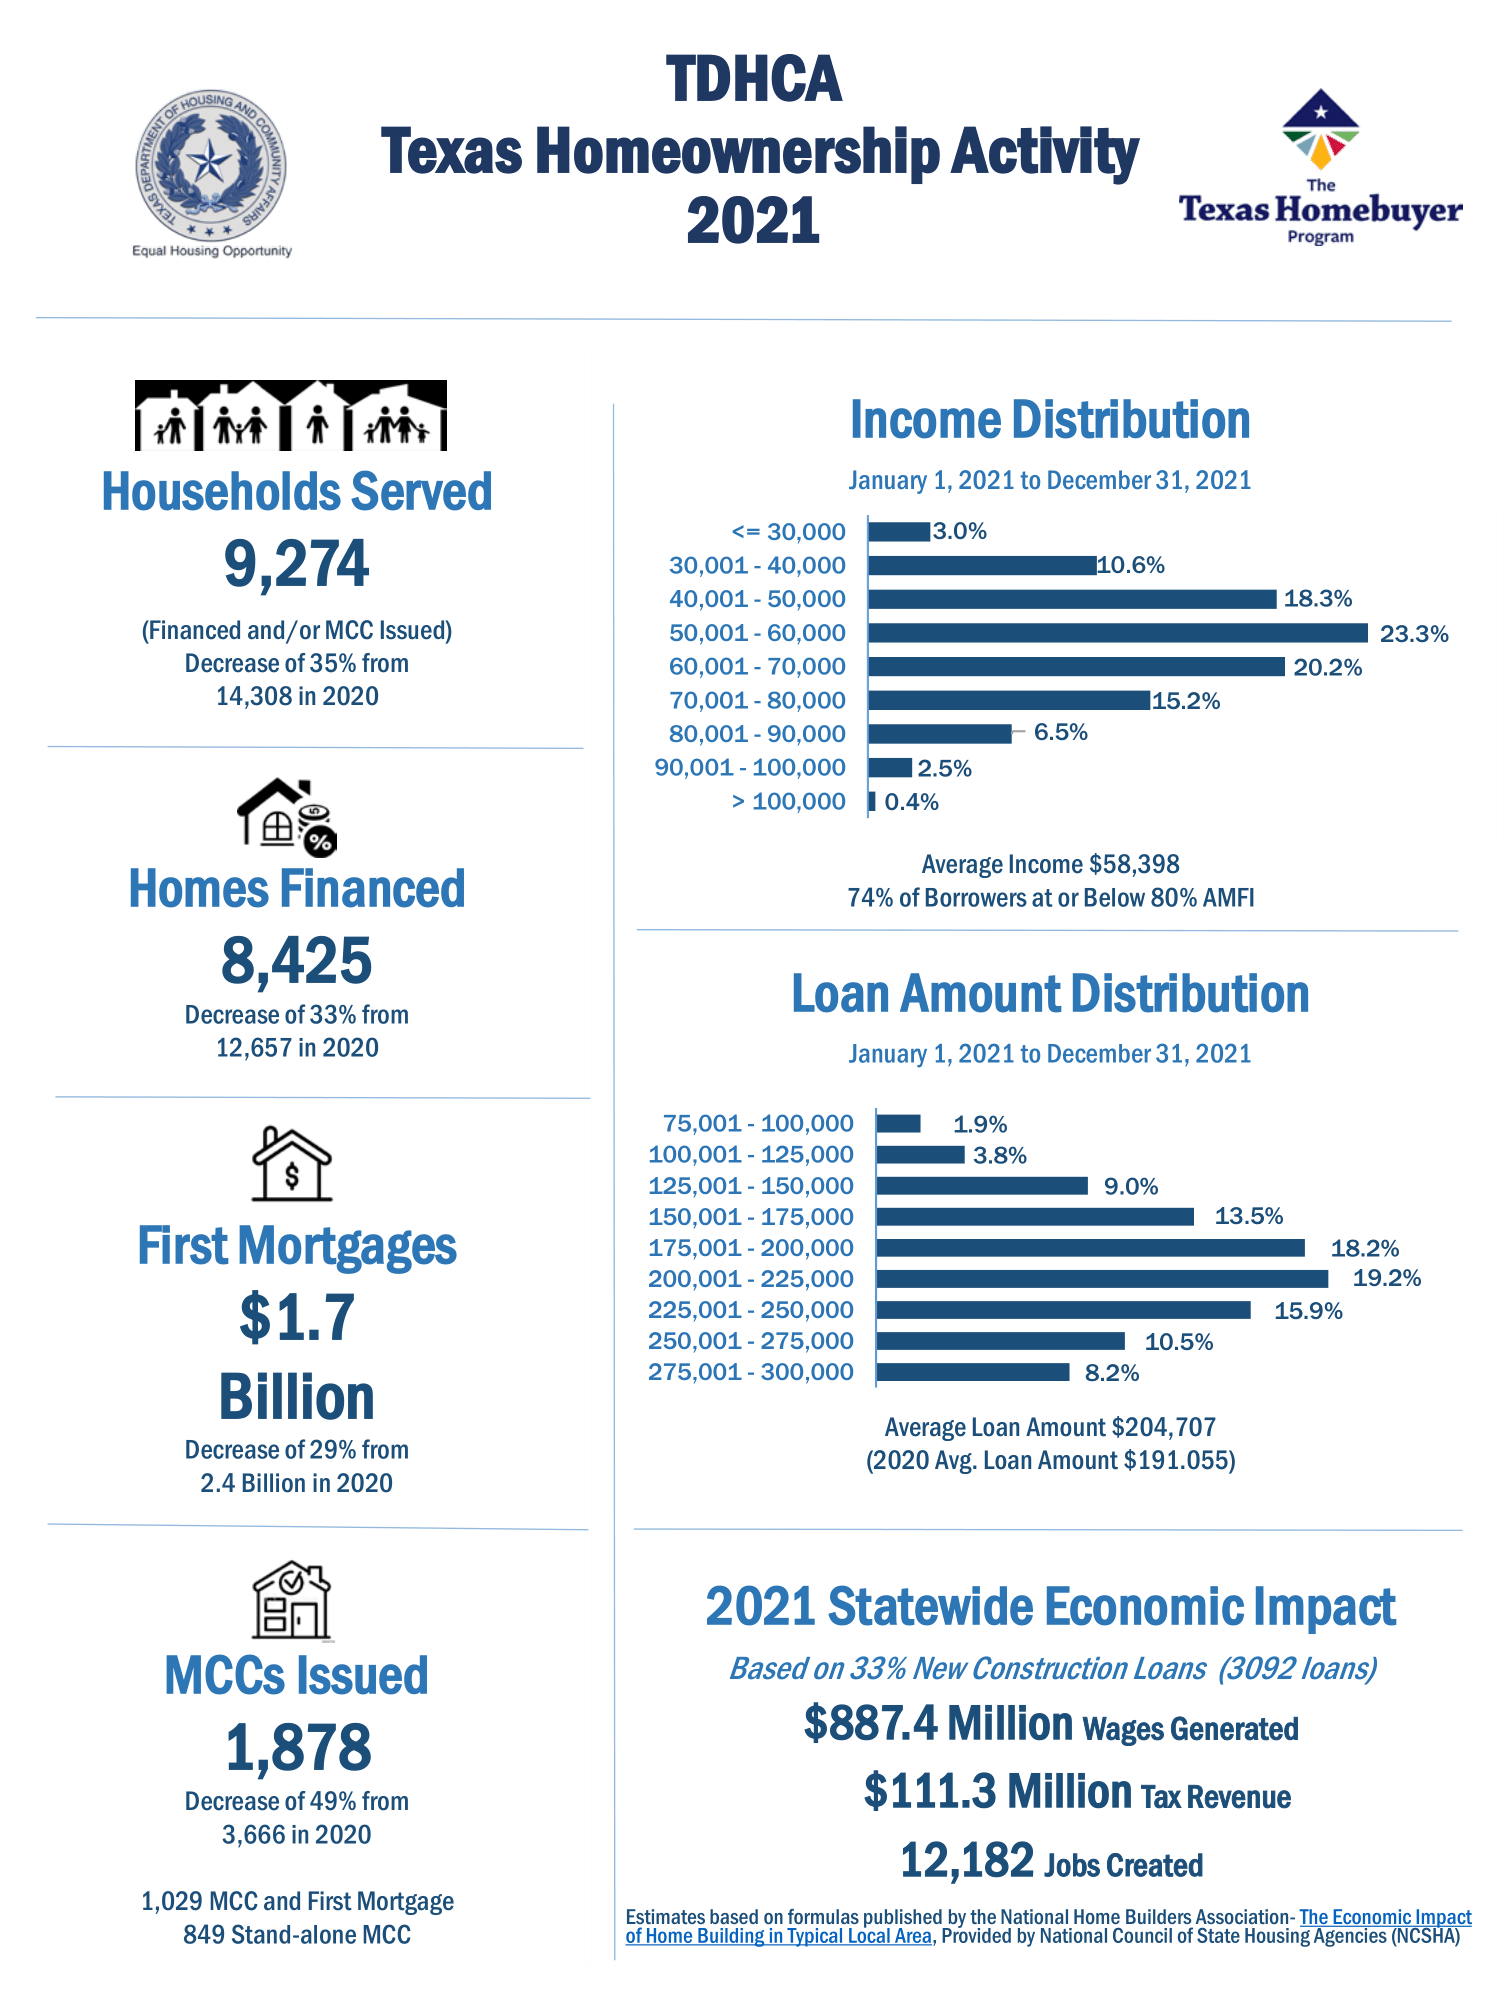 Homeownership Activity Infographic